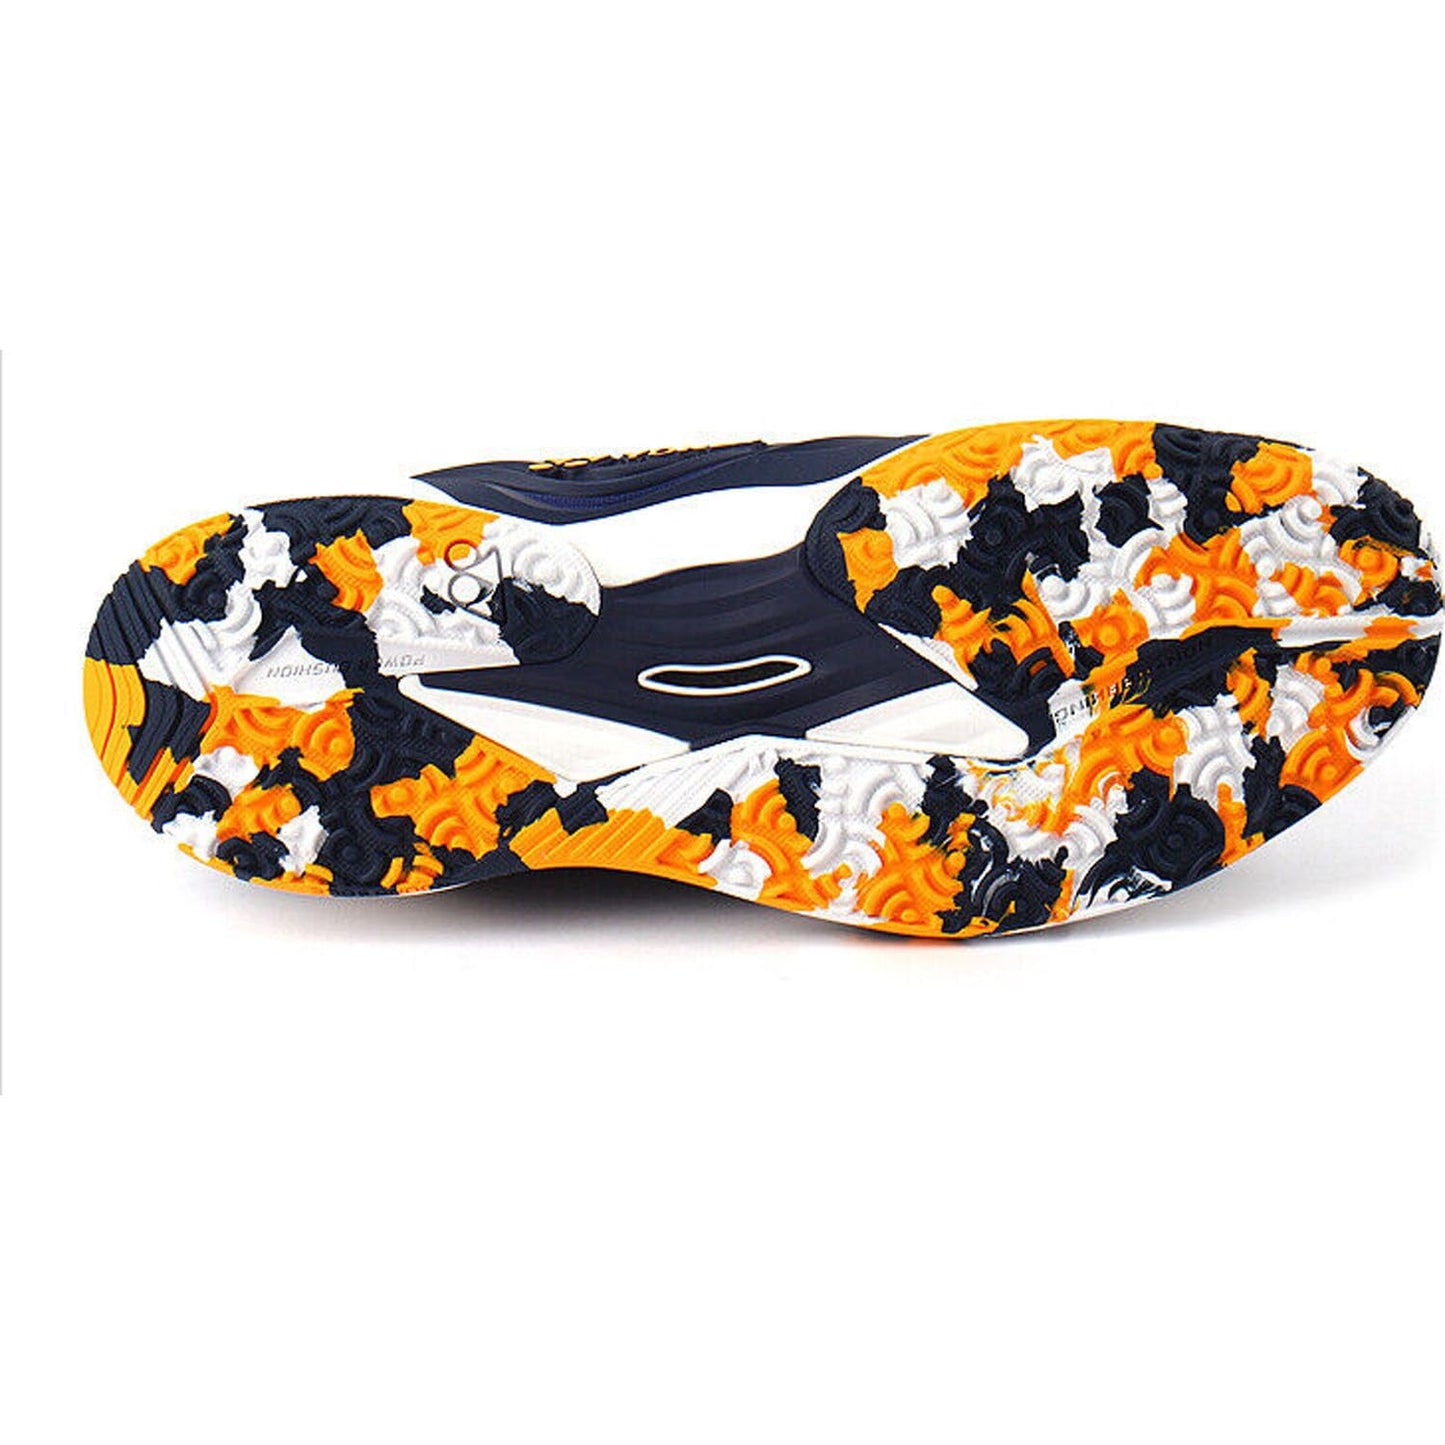 Yonex Power Cushion Fusionrev 5 Clay Tennis Shoe, Navy/Orange